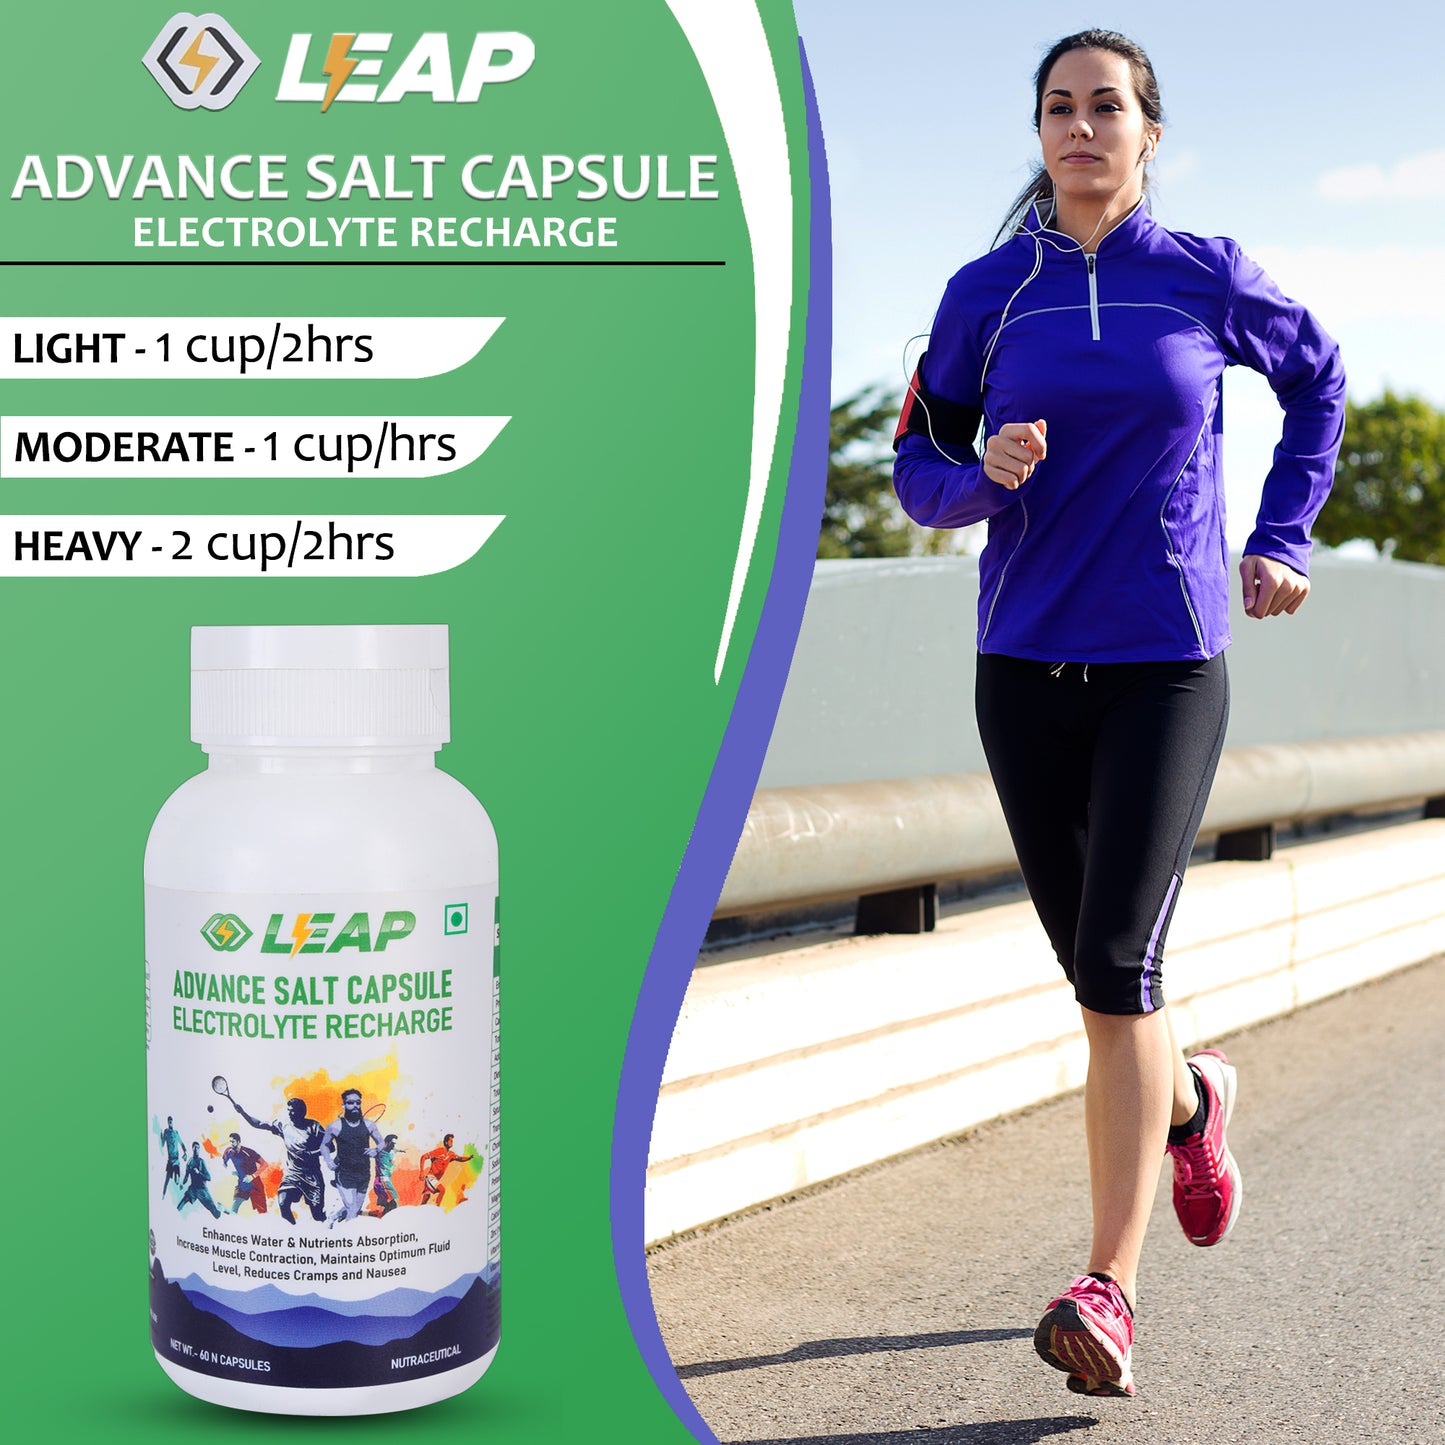 LEAP Advance Salt Capsule Electrolyte Recharge : 60 Vegan Non-Caffeinated Capsules